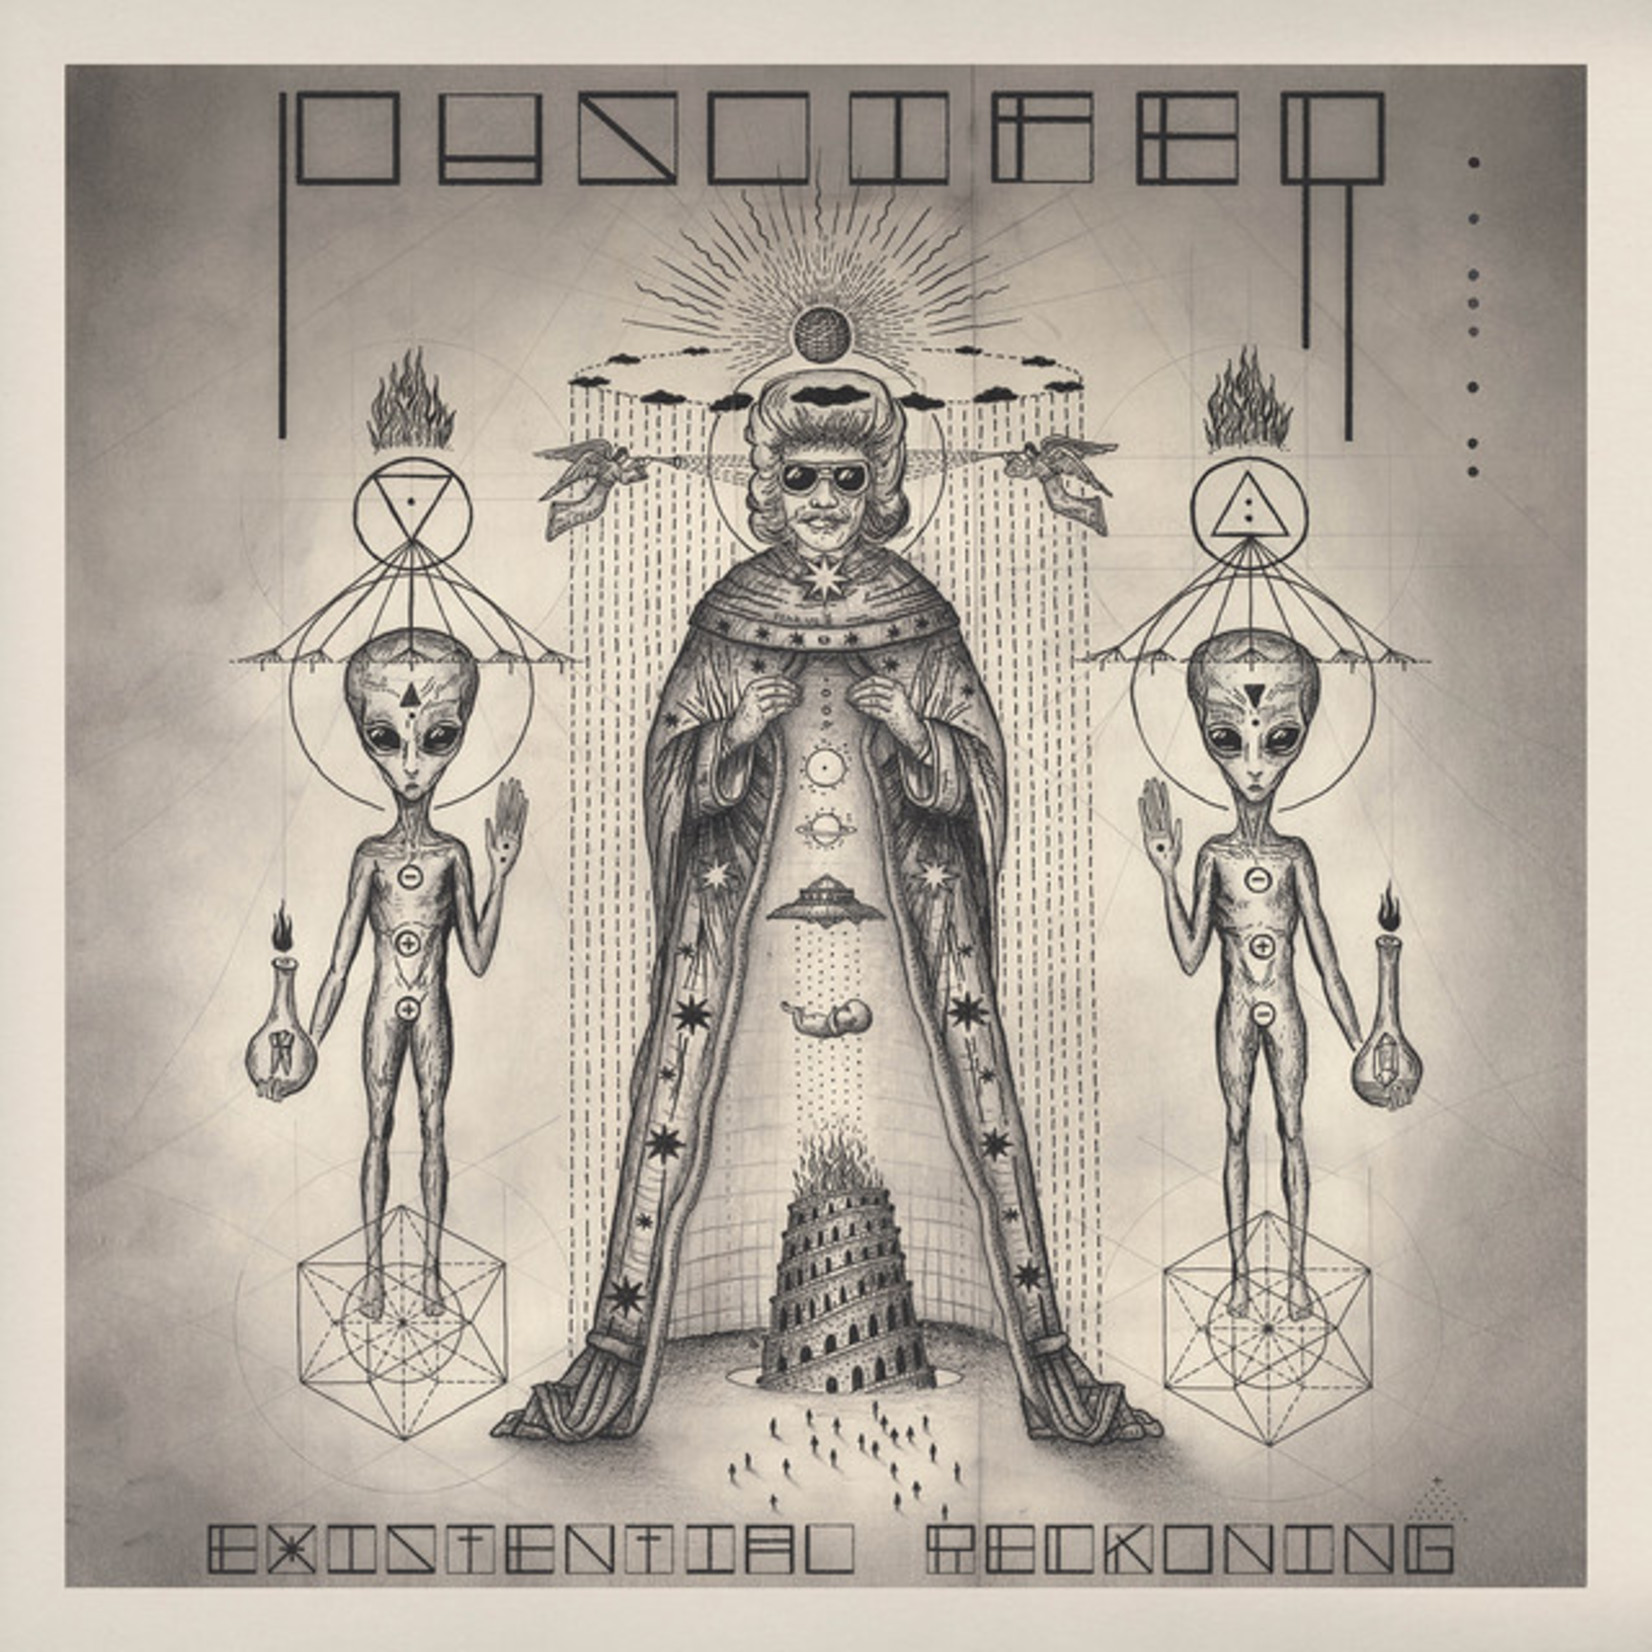 Vinyl Puscifer - Existential Reckoning. FINAL SALE